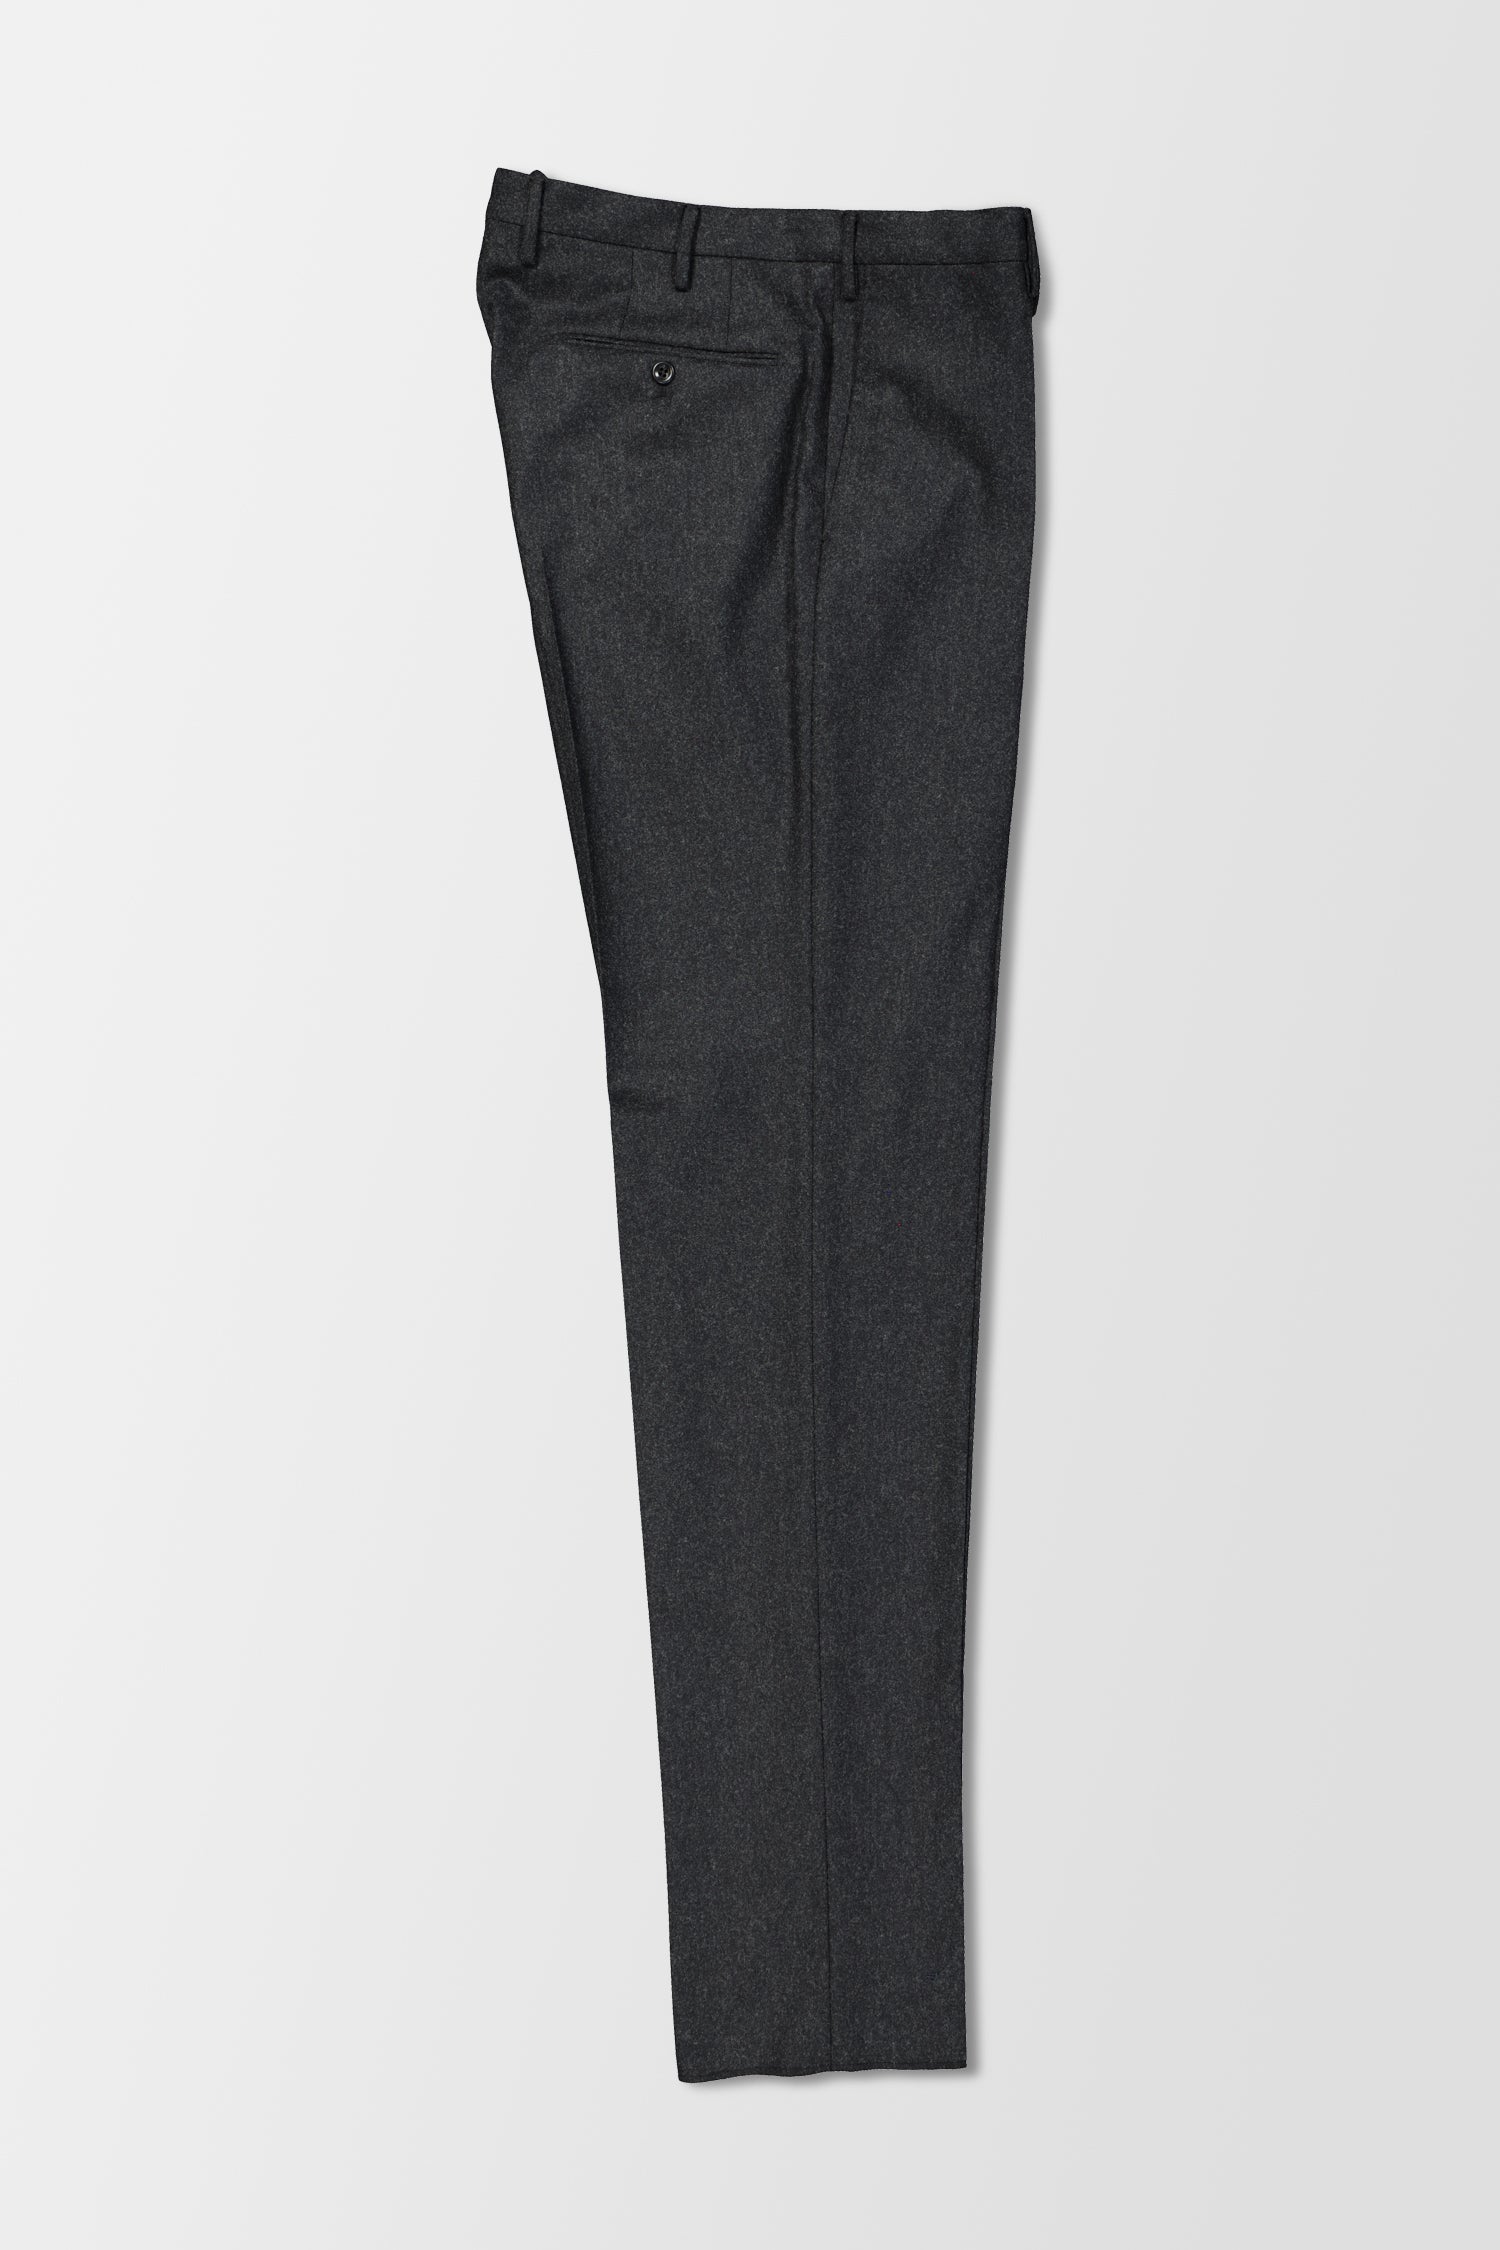 Incotex Dark Grey Trousers